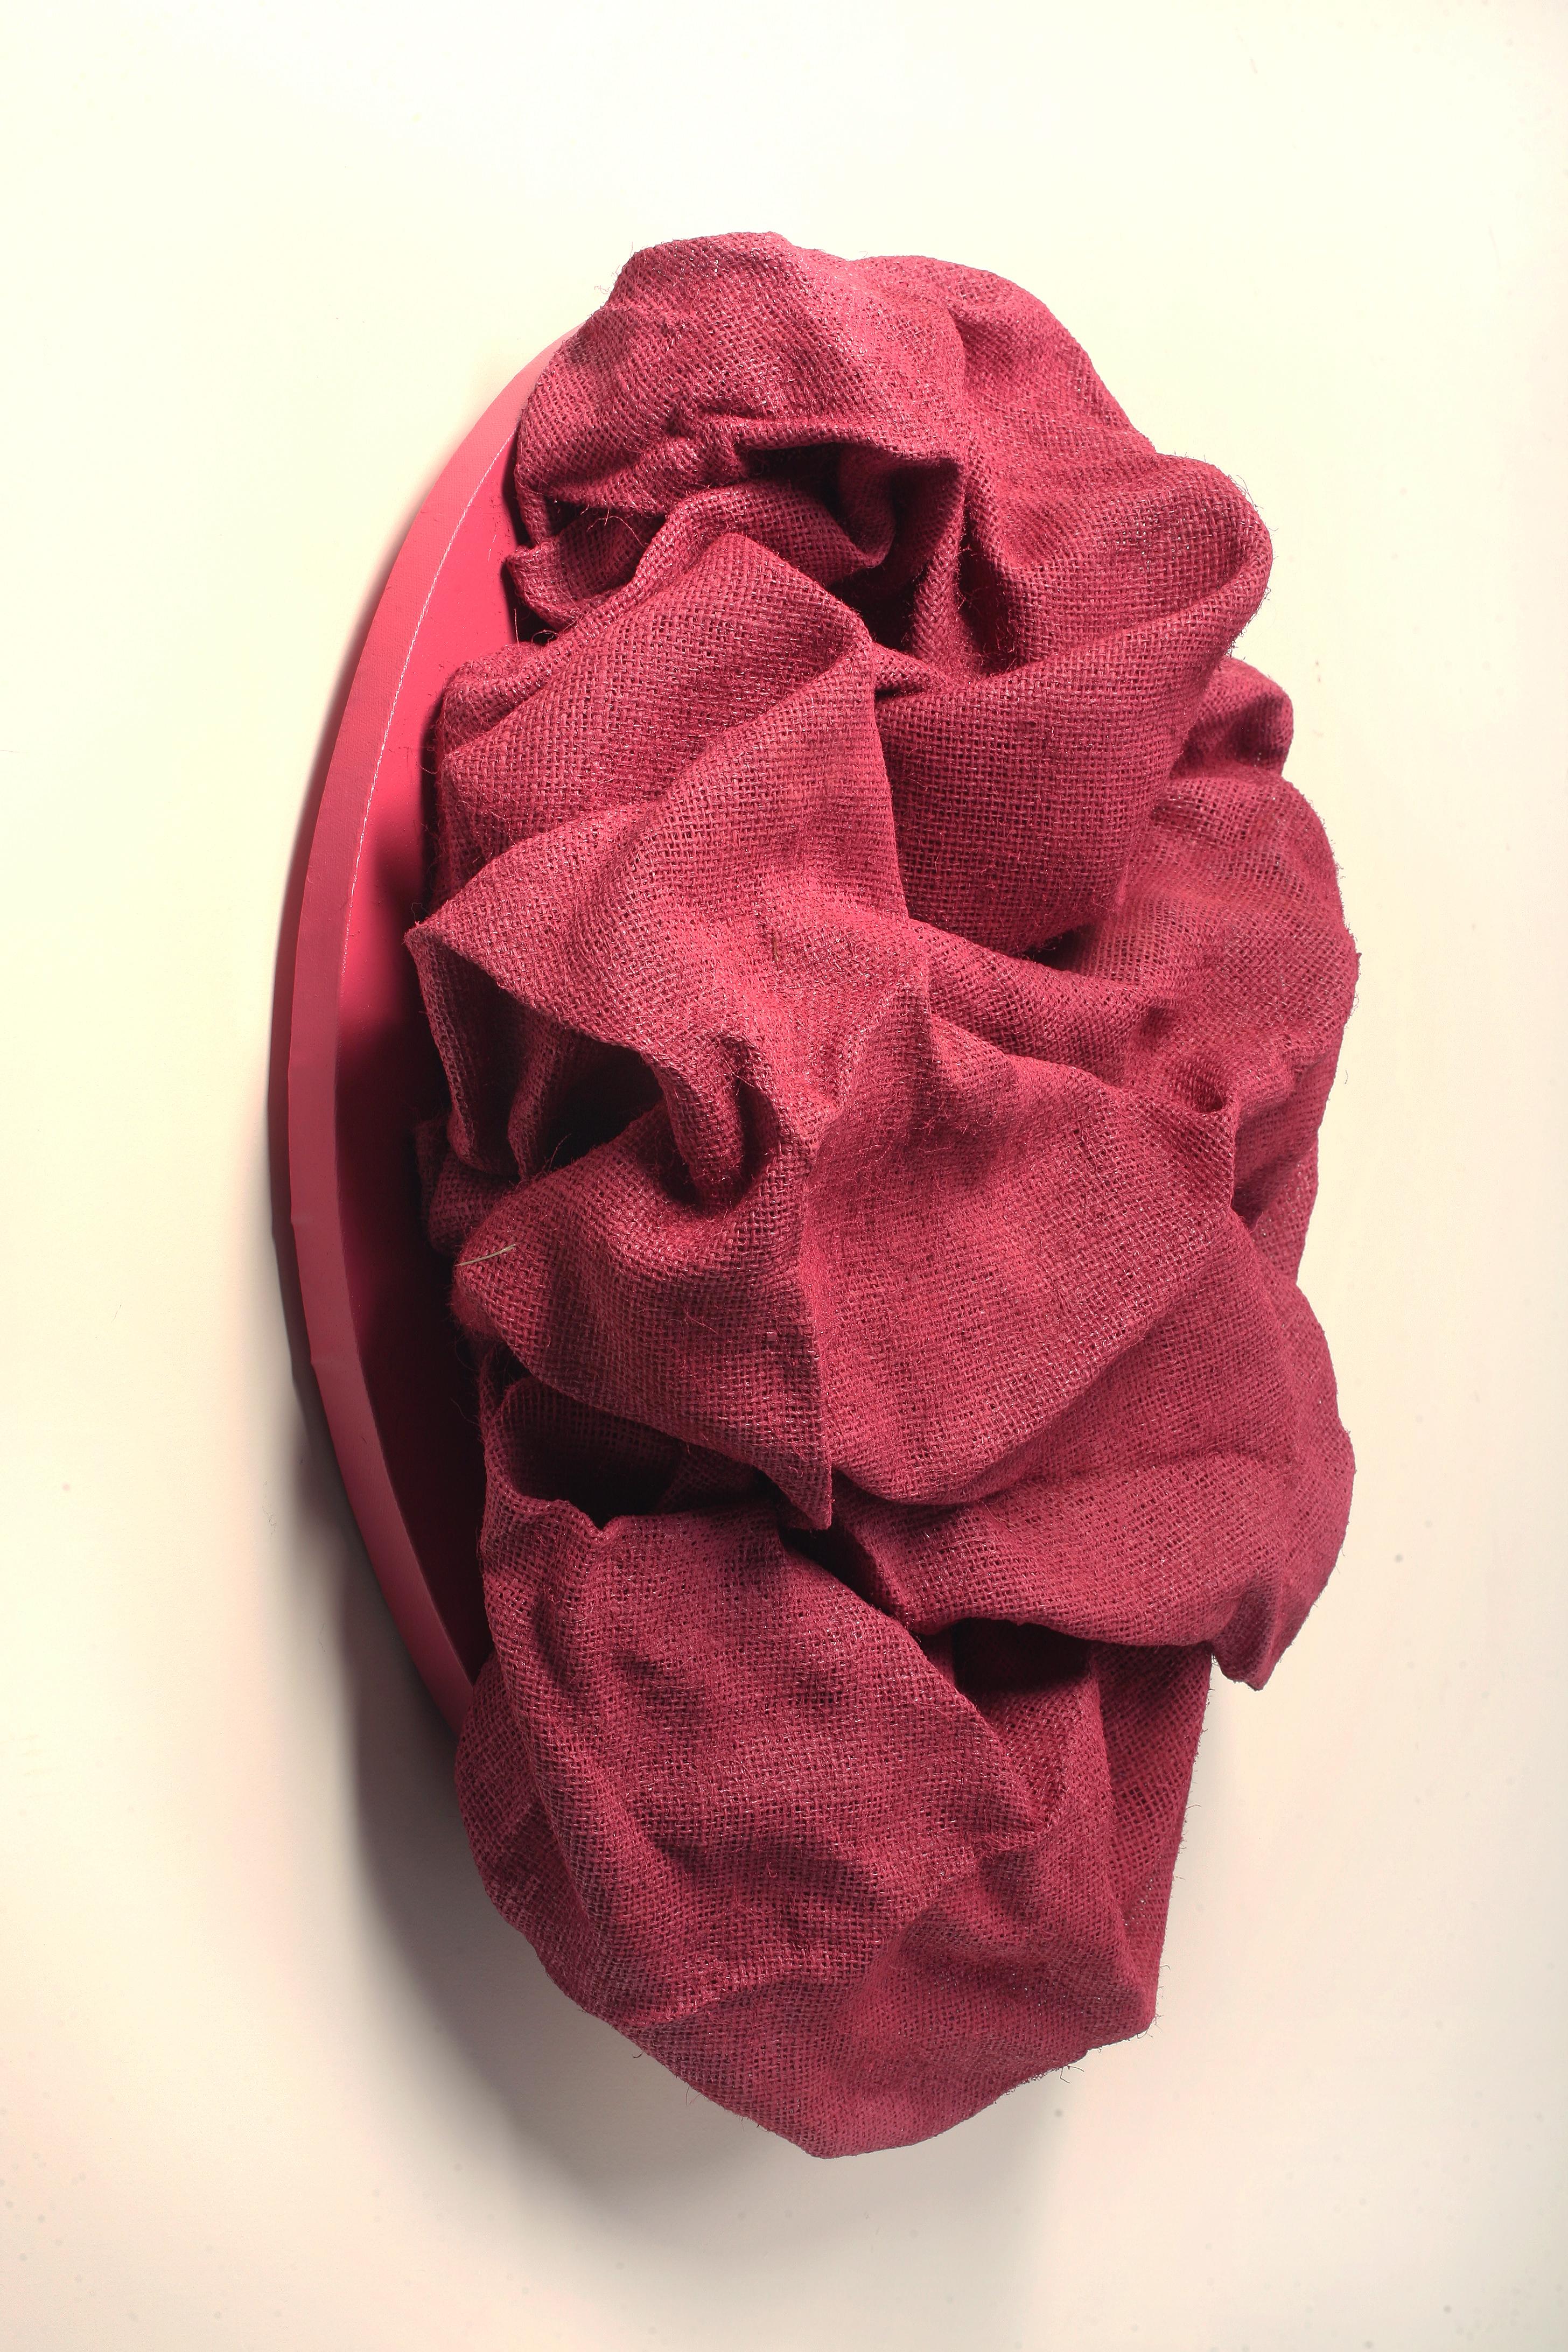 Watermelon Folds (Fabric, red, wall sculpture, contemporary design, textile art) - Sculpture by Chloe Hedden